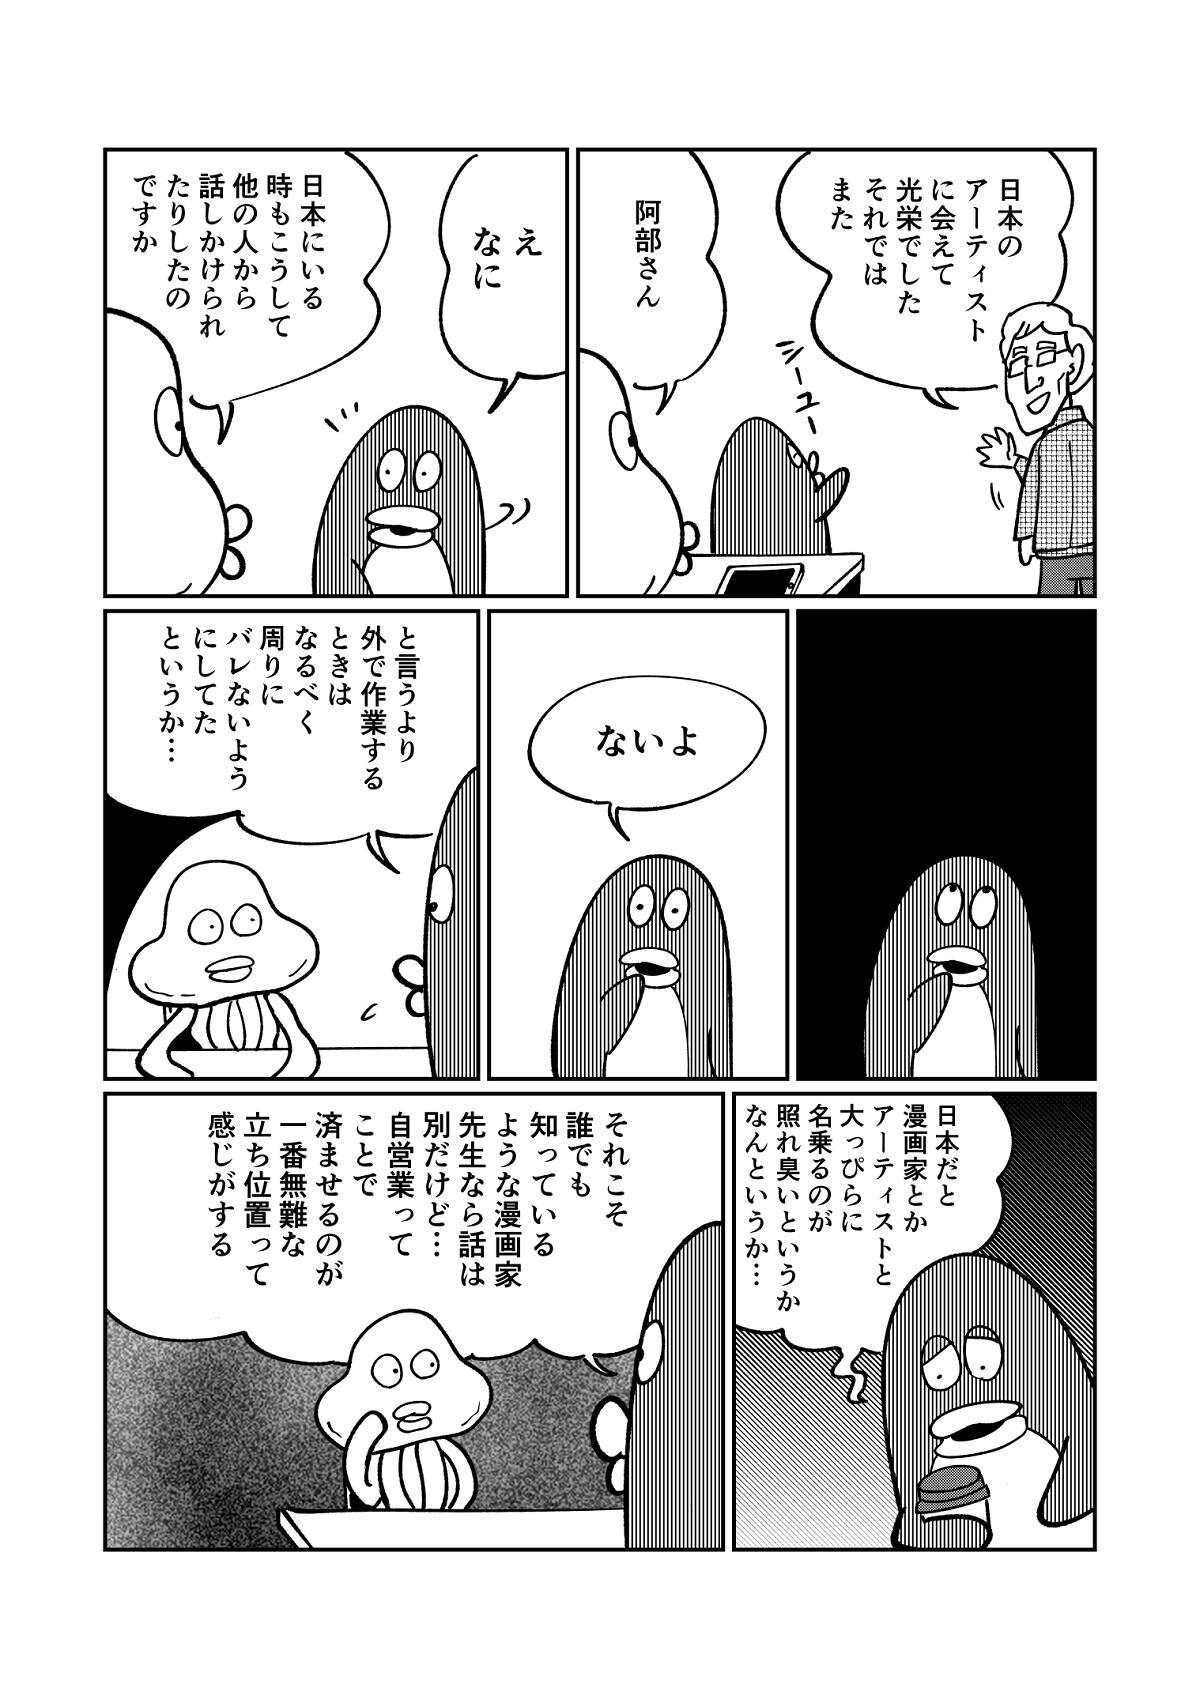 https://www.ryugaku.co.jp/column/images/jawamura12_4_1200.jpg